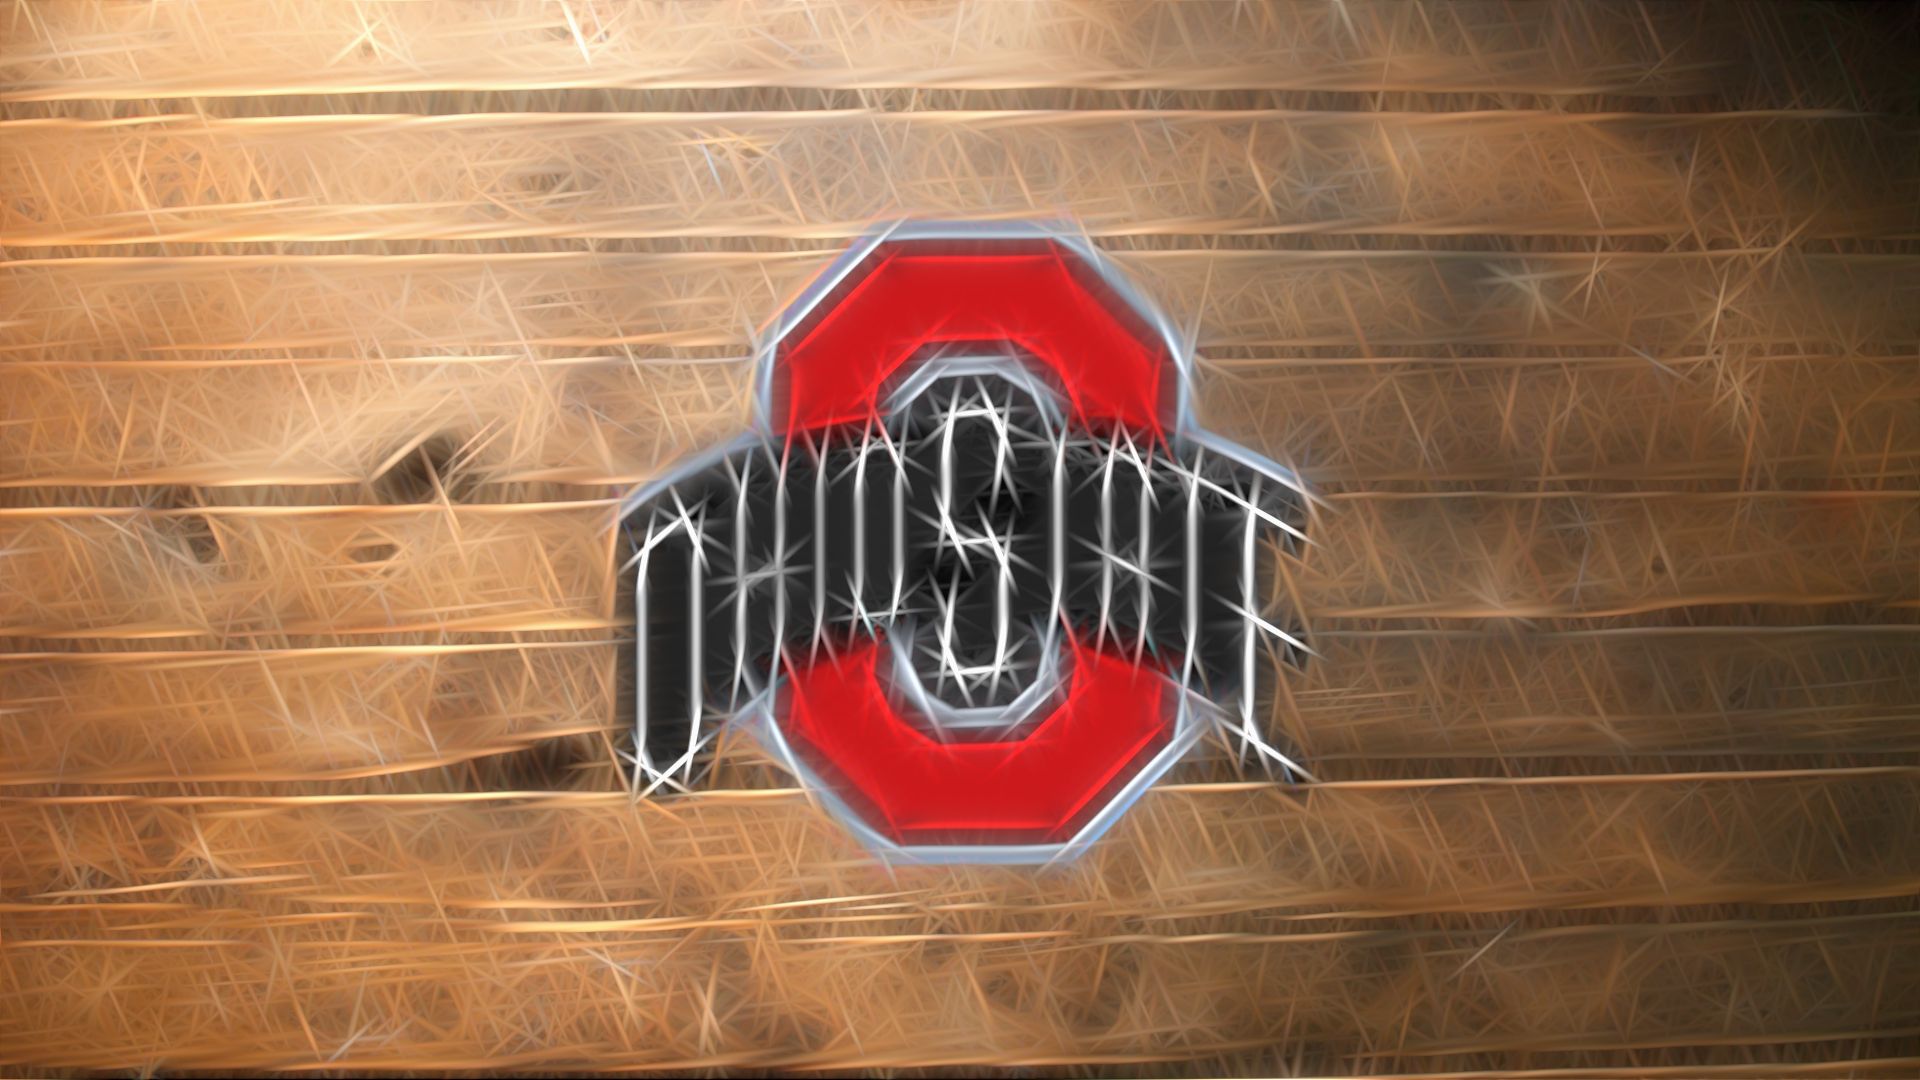 OSU Wallpaper 207 - Ohio State Football Wallpaper (29089641) - Fanpop